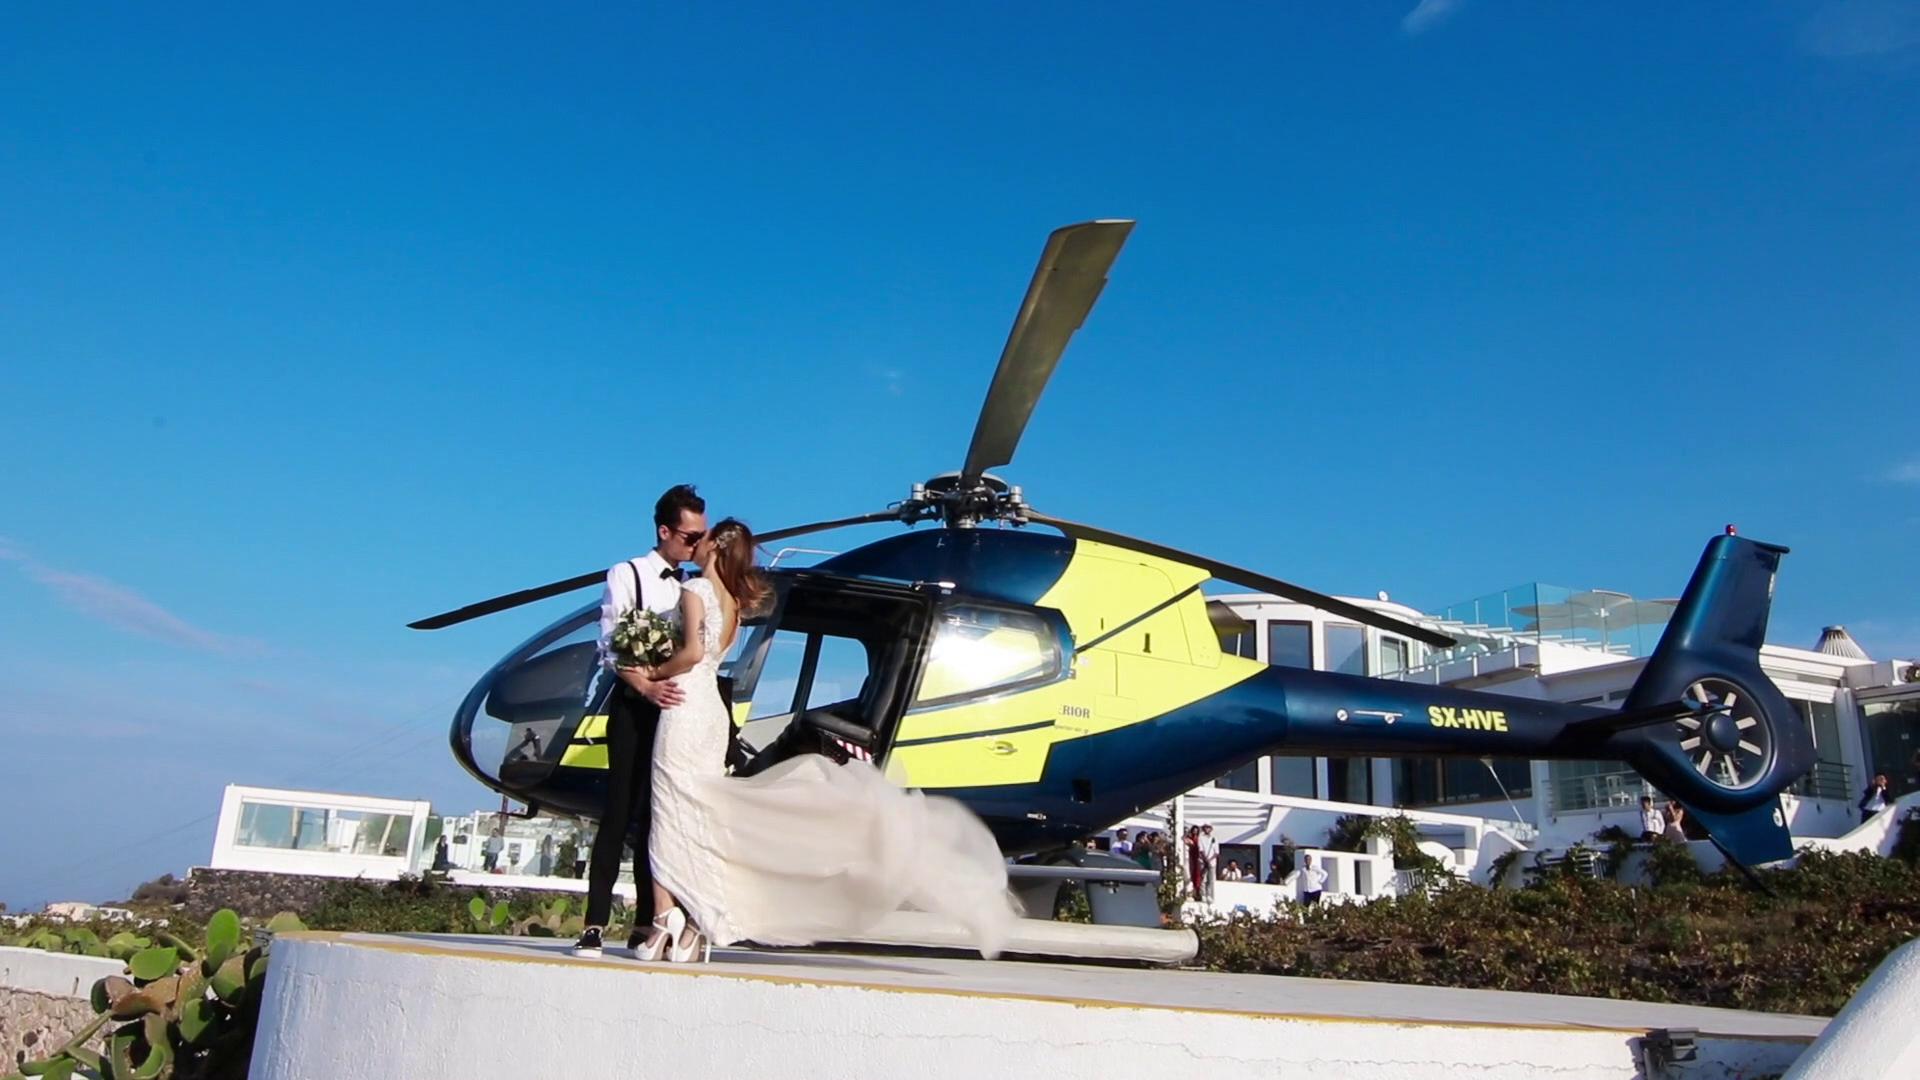 Santorini Wedding Videographer